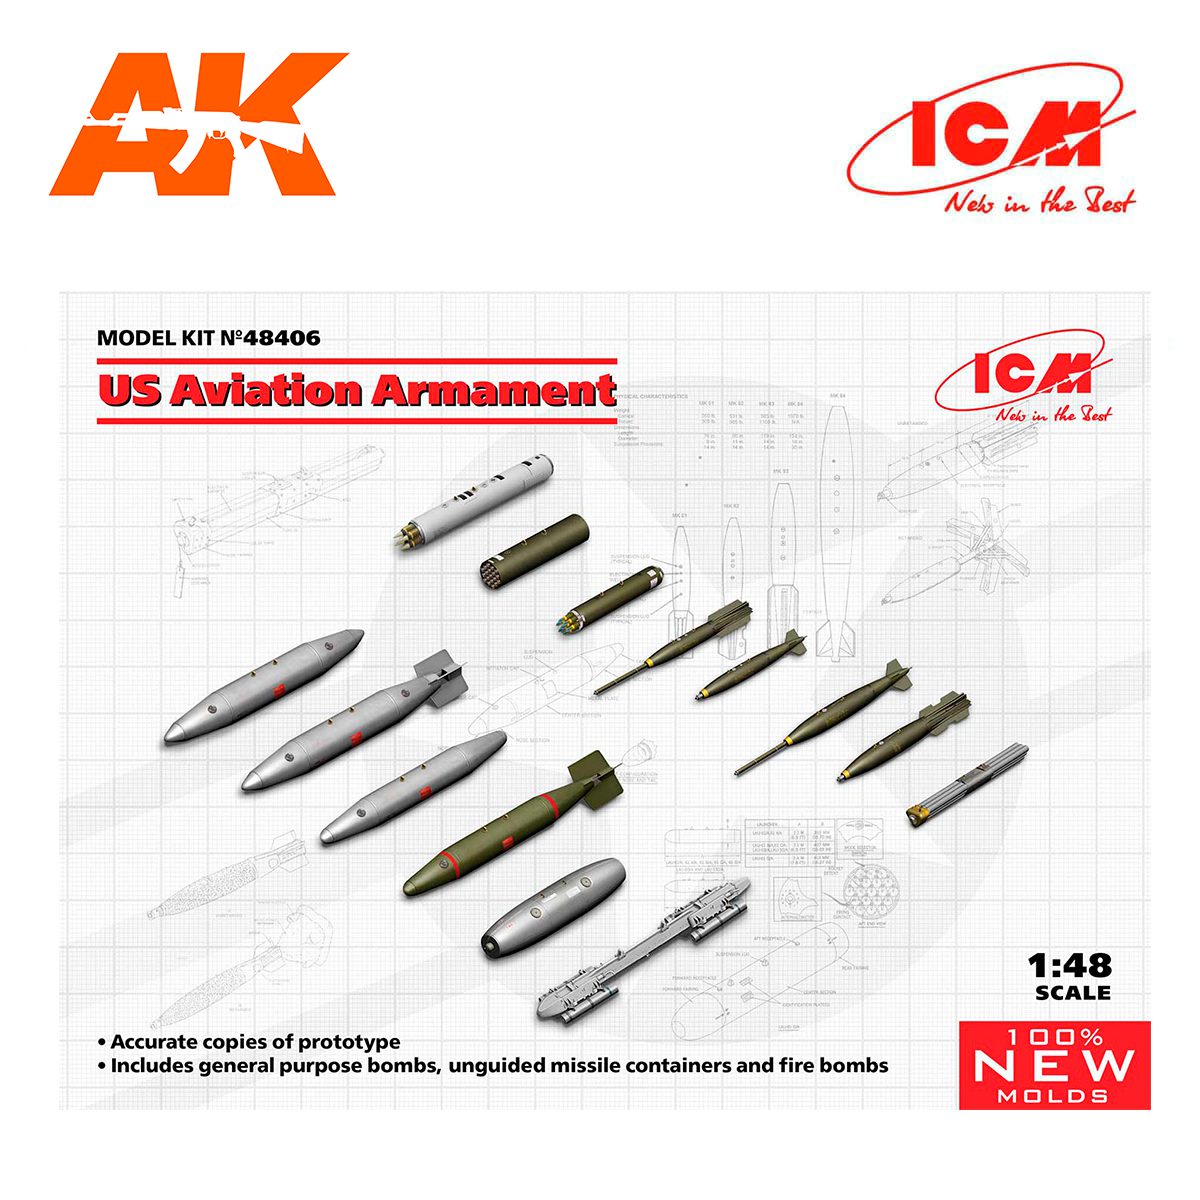 US Aviation Armament (100% new molds) 1/48